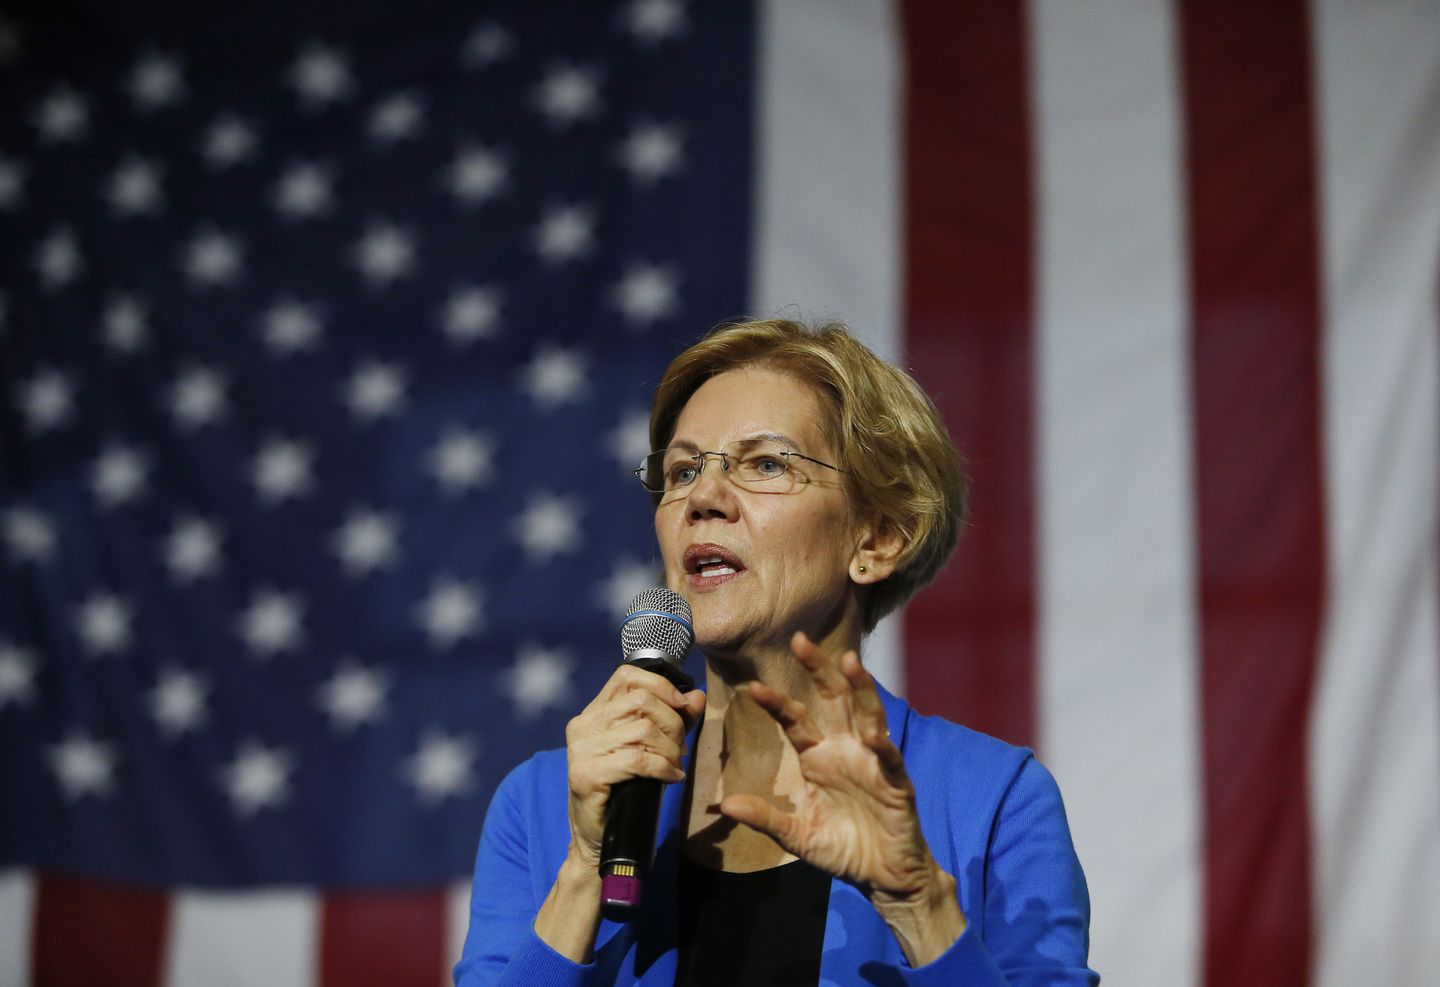 Elizabeth Warren, US Senator and 2020 Presidential hopeful